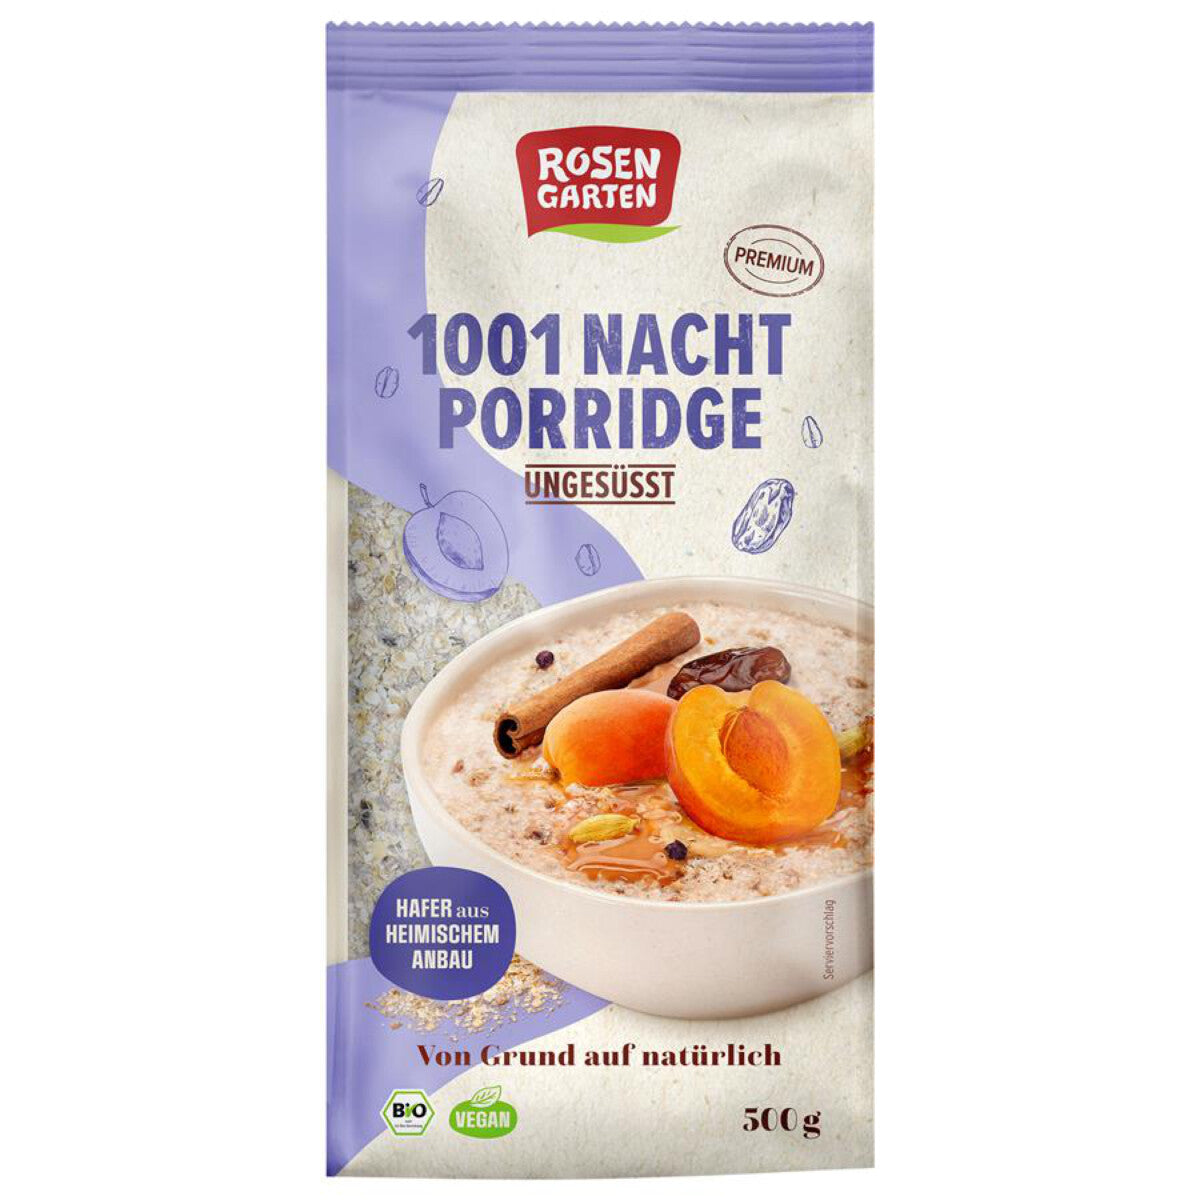 ROSENGARTEN 1001-Nacht Porridge ungesüßt - 500 g